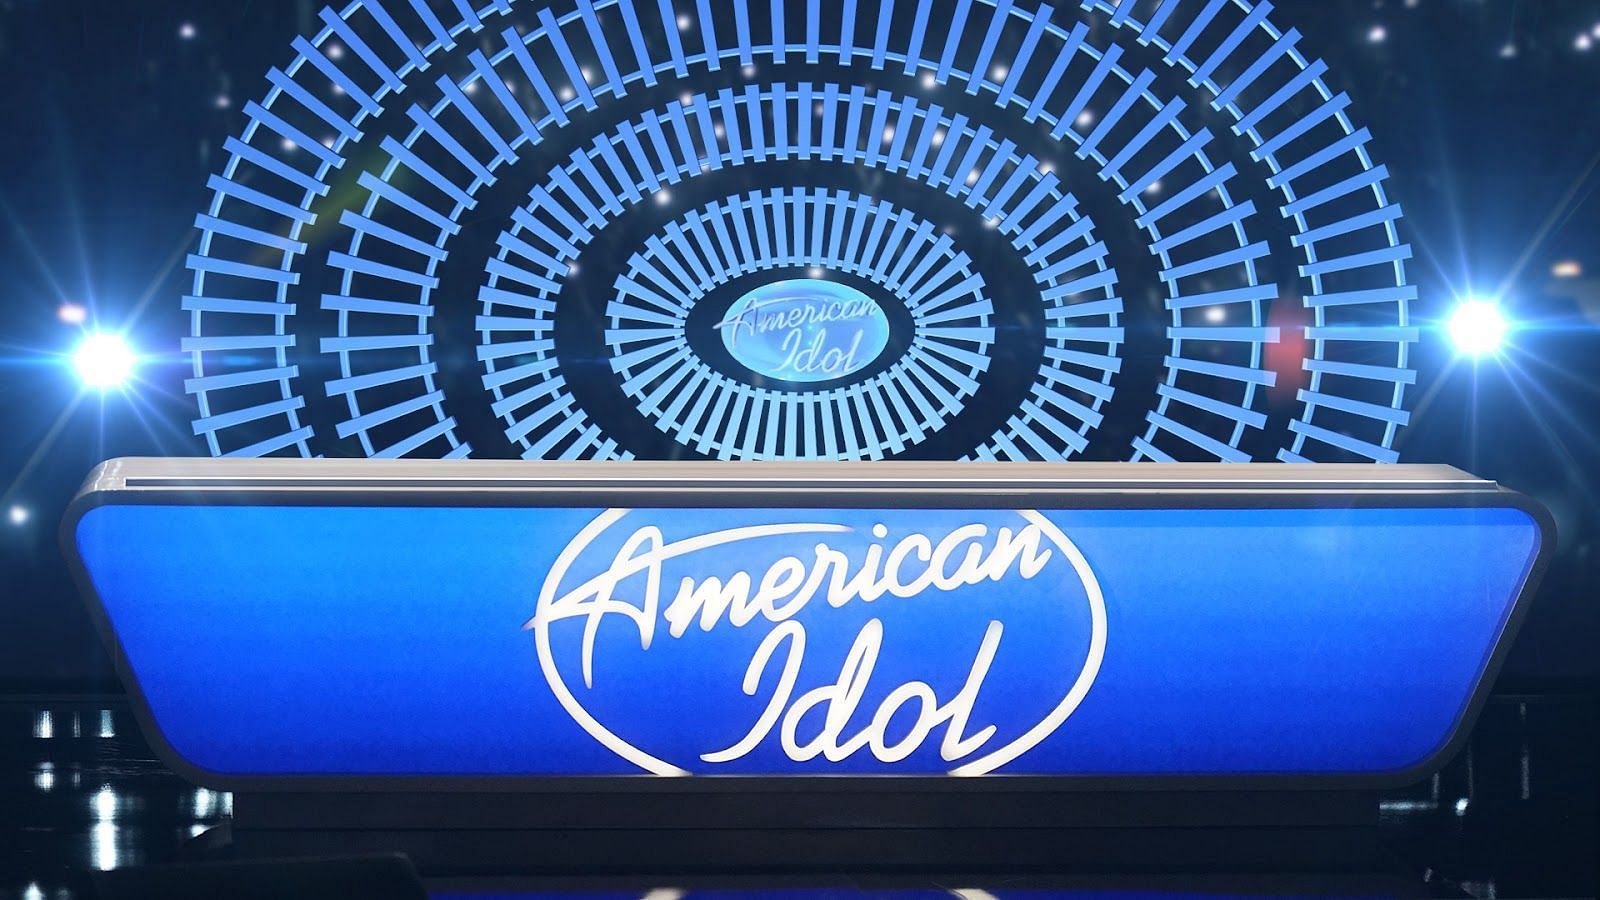 Who won American Idol? List of American Idol Winners